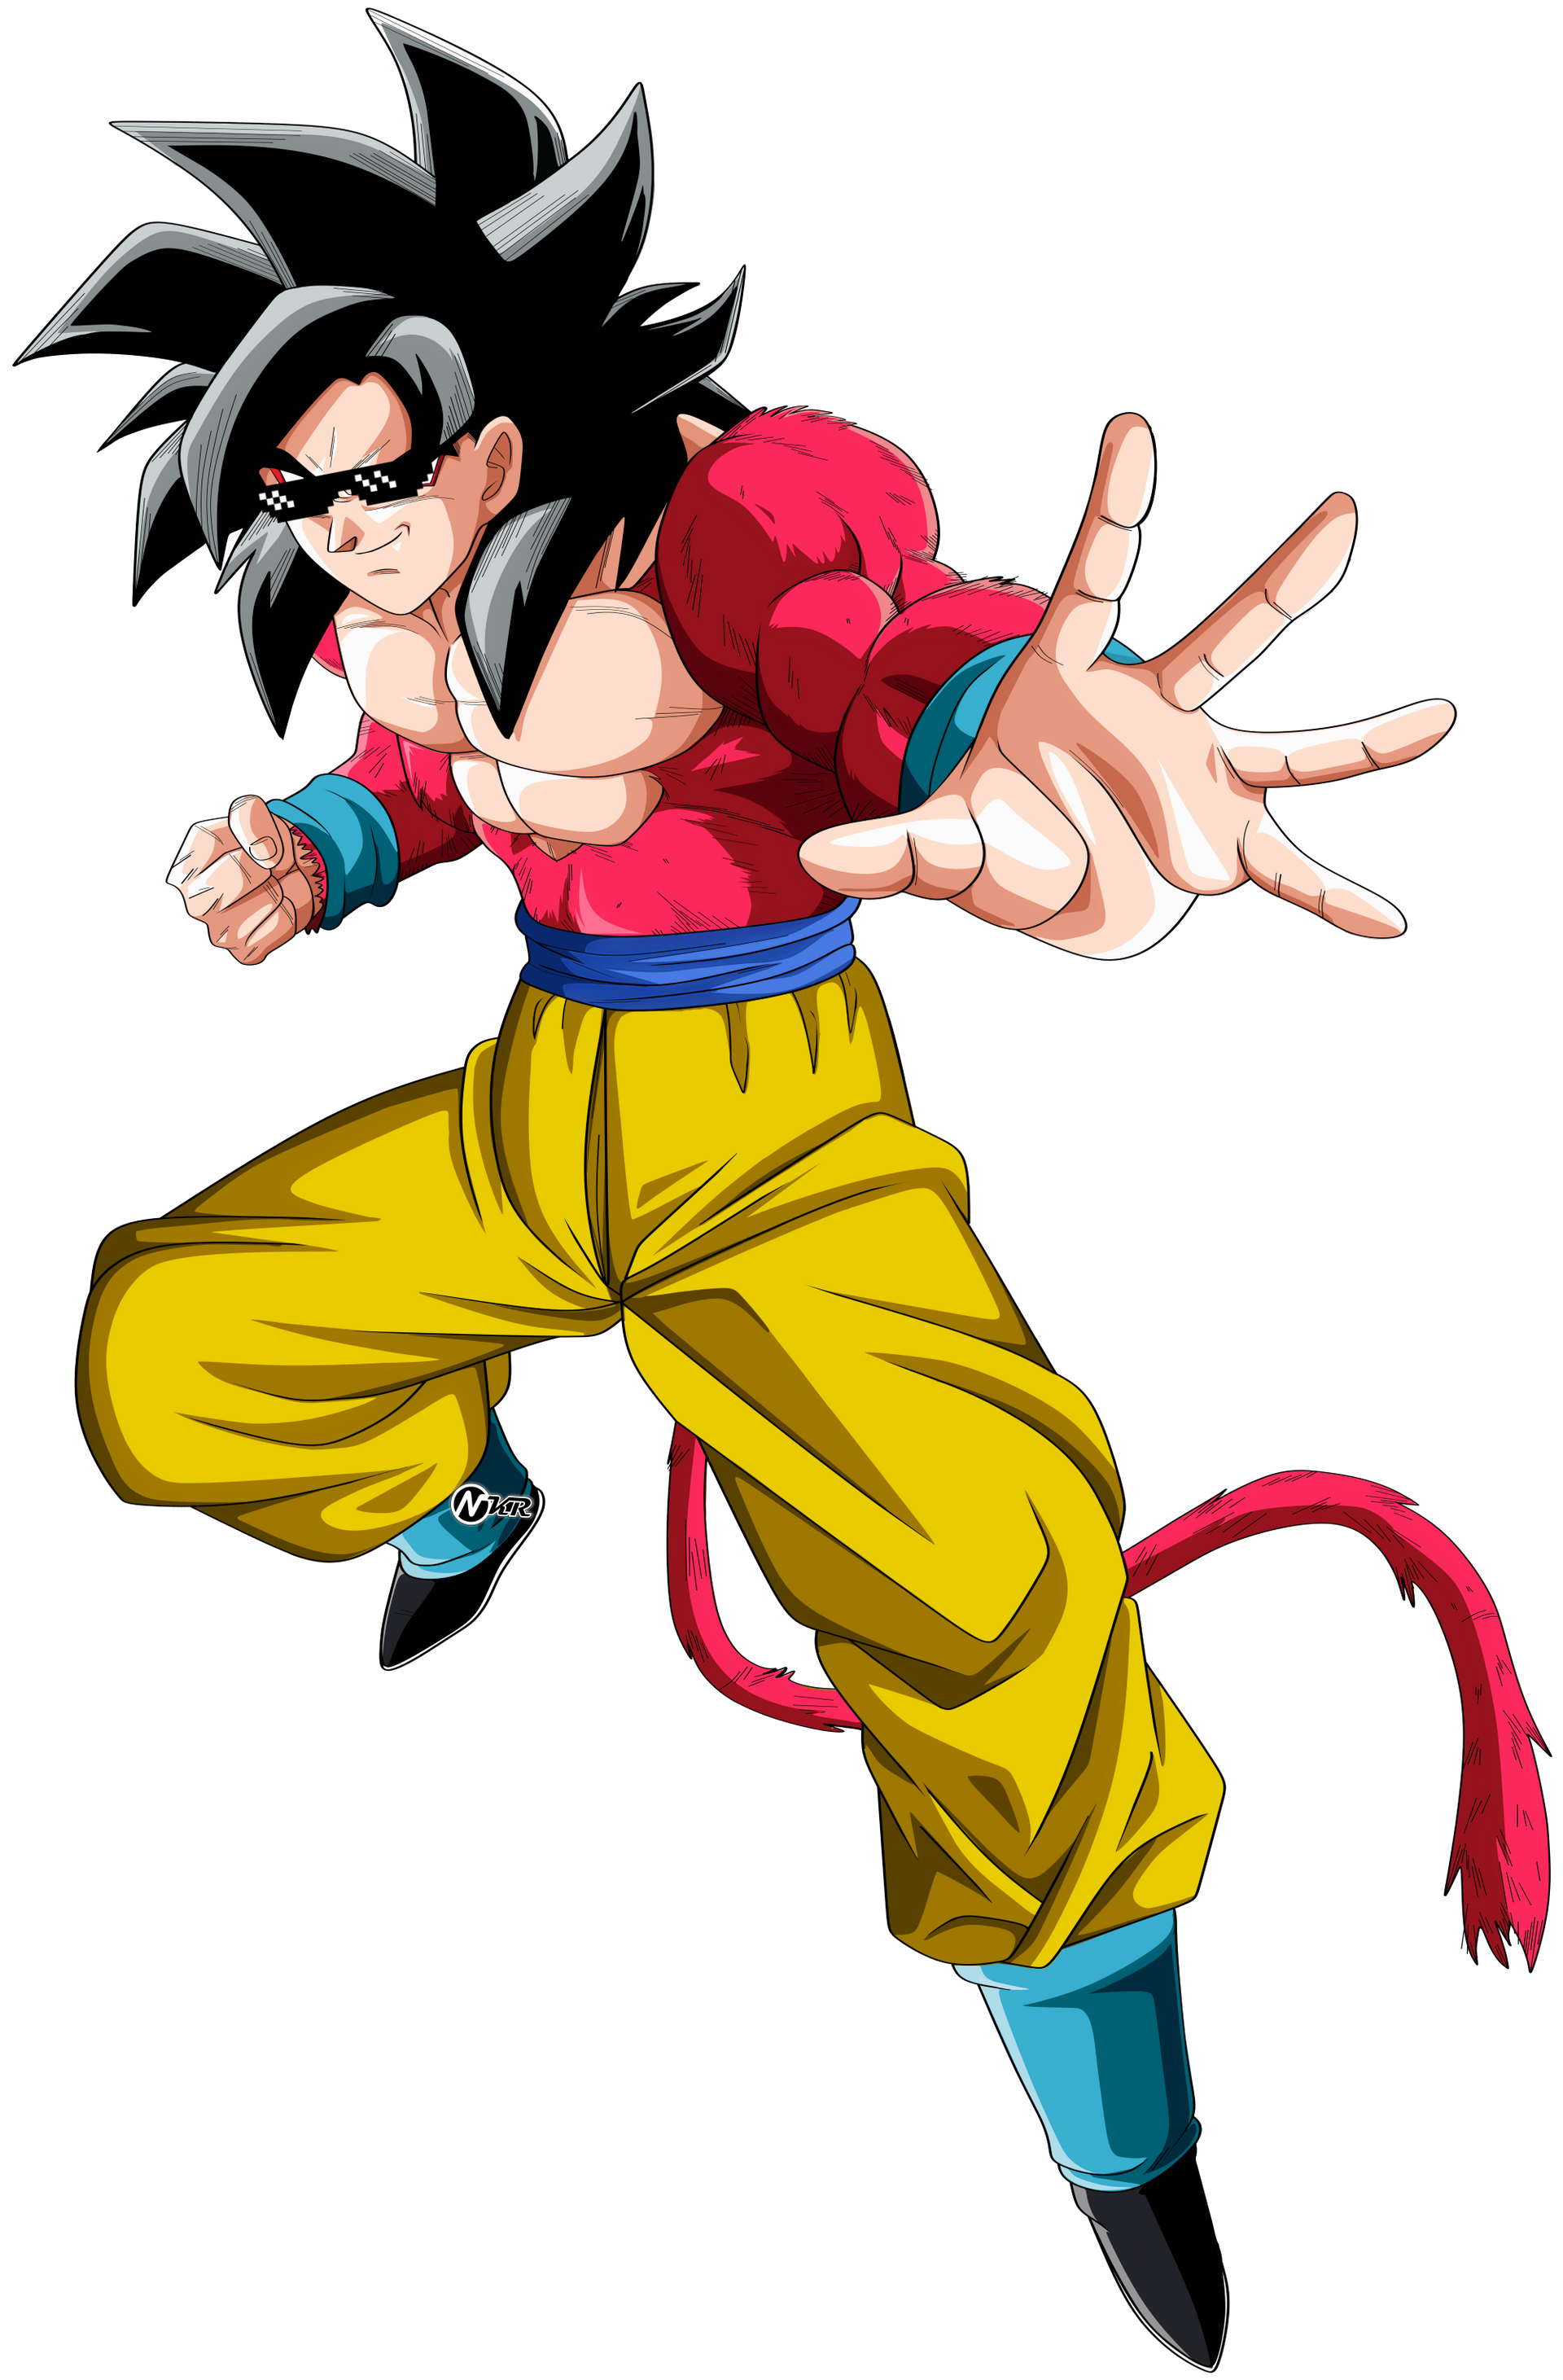 Super Saiyan 5 Goku by Robzap18 on DeviantArt